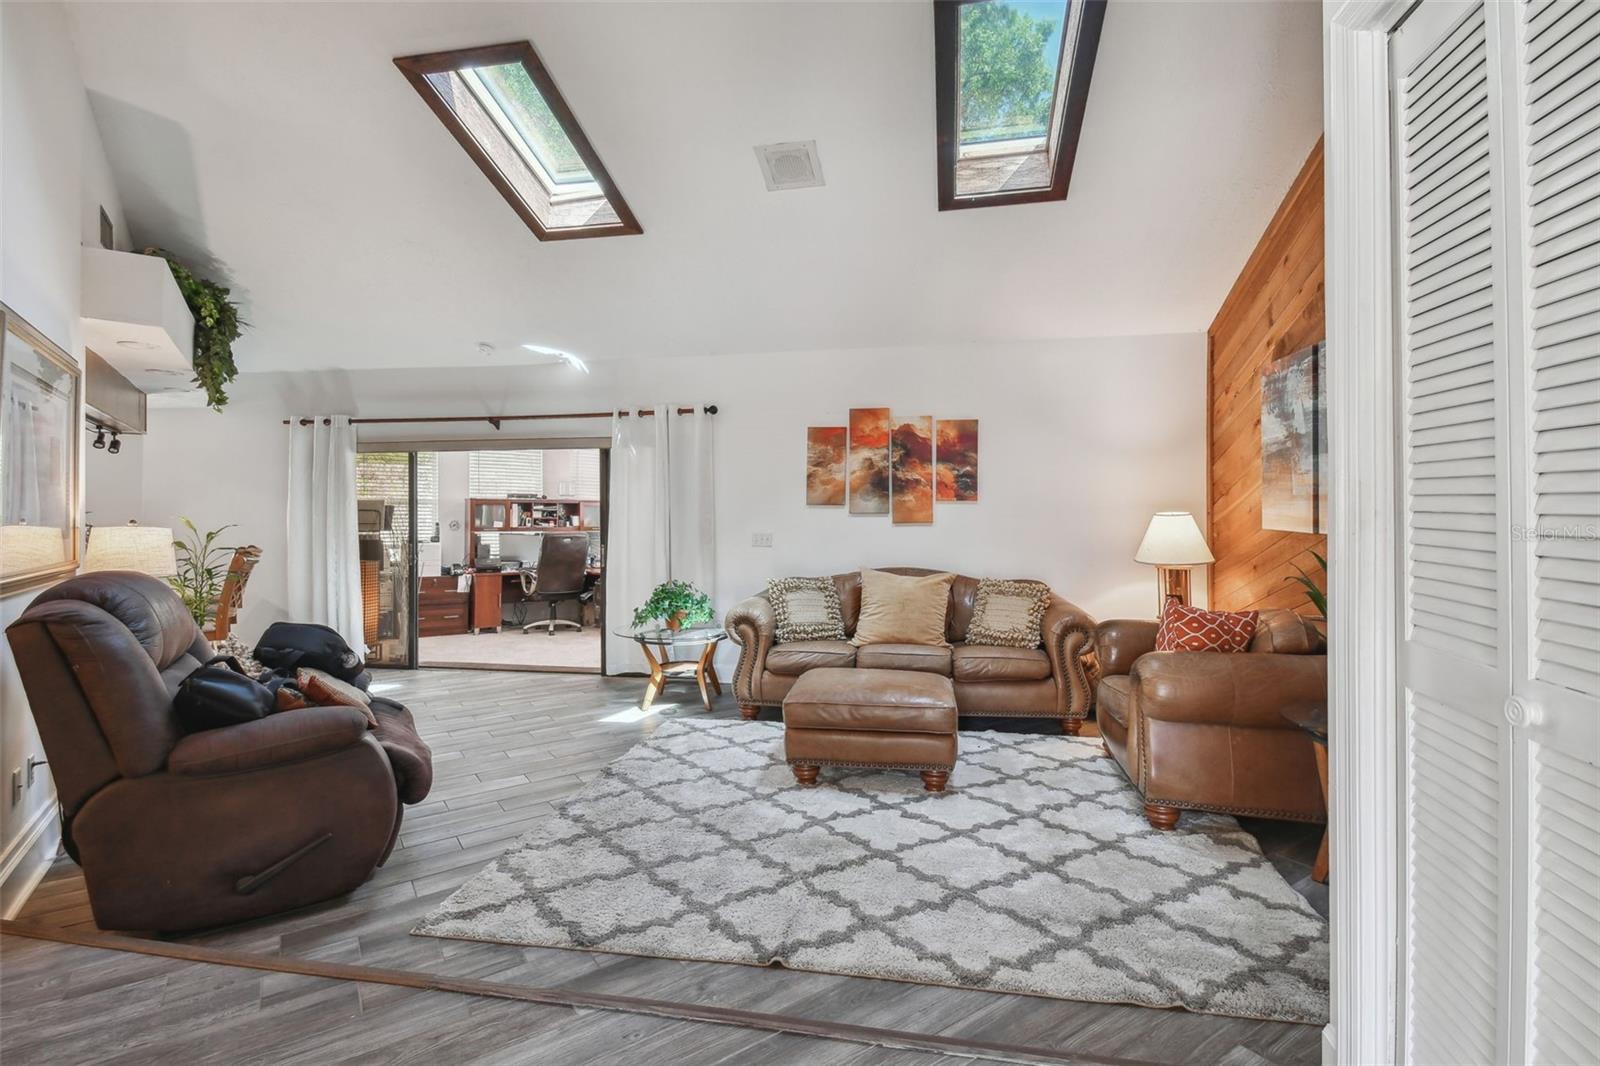 Spacious living room with skylights.